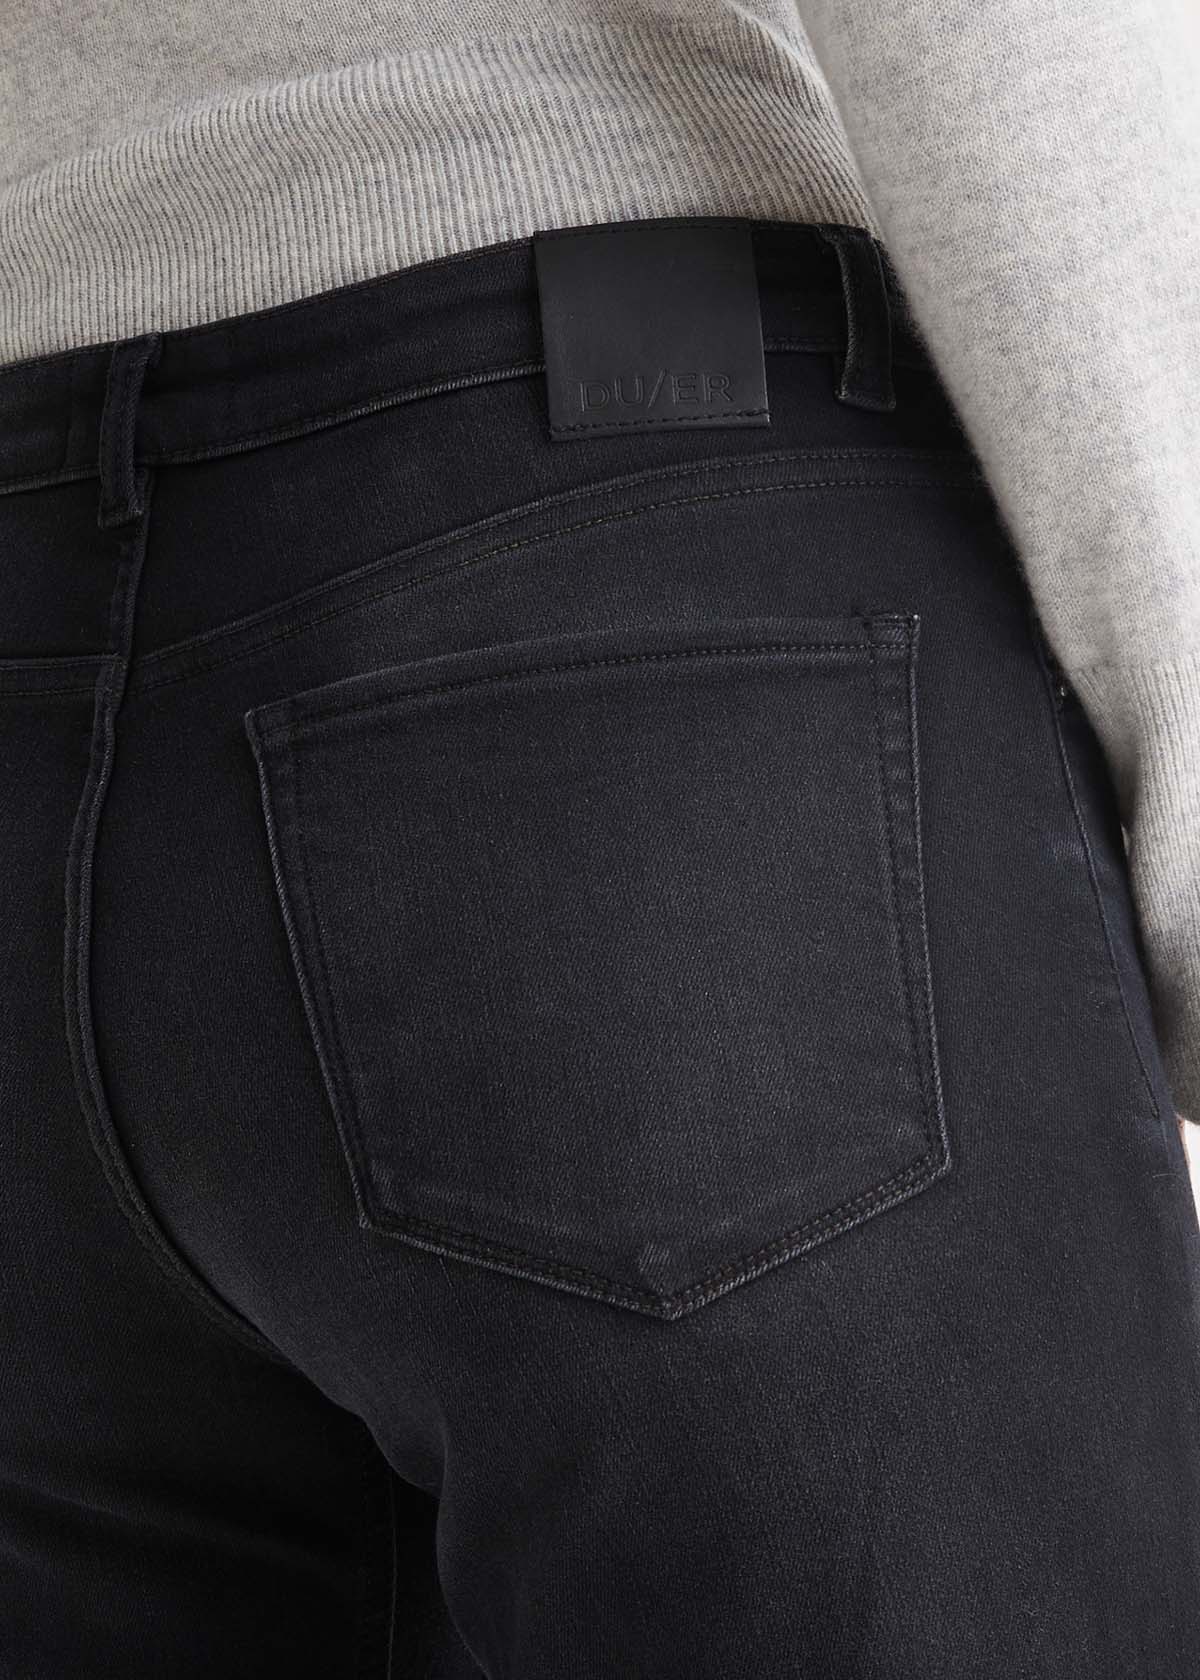 Women's High Rise Serious Sweats Pocket Bootcut Pants